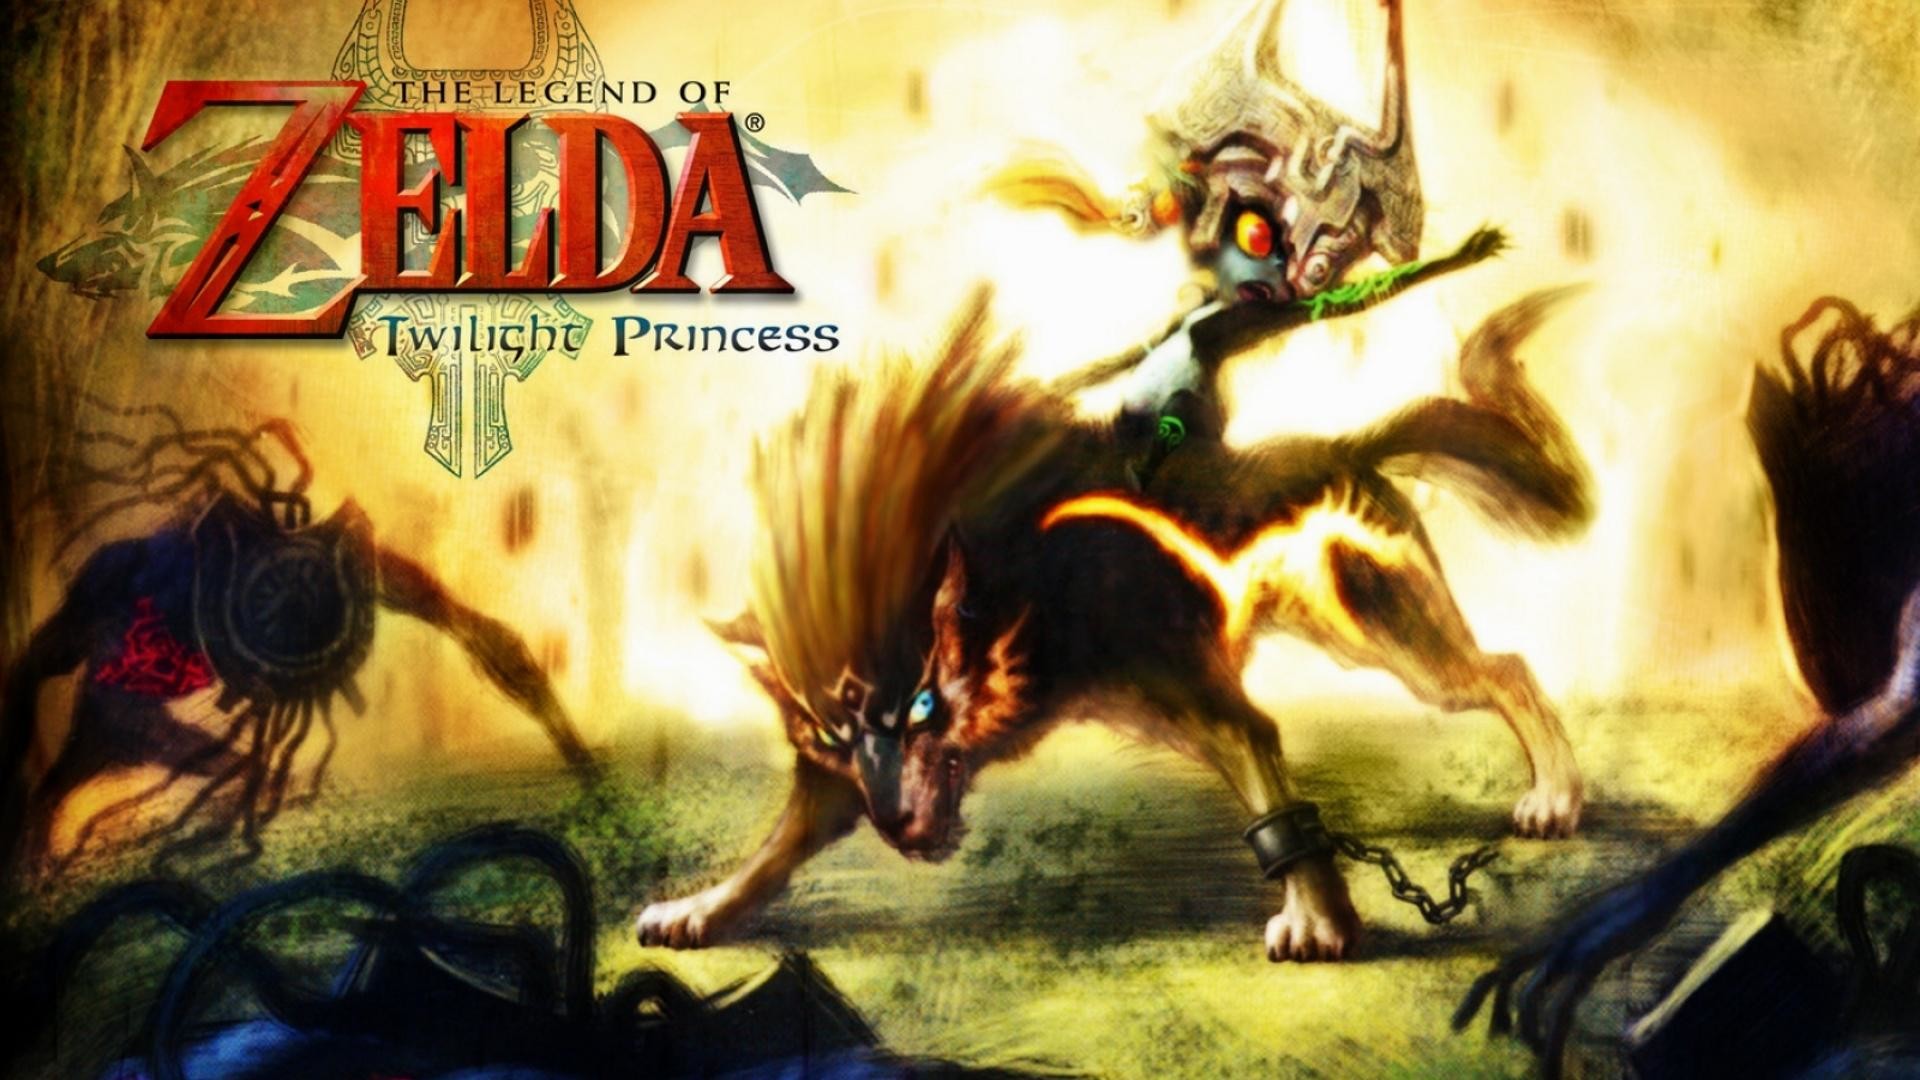 1920x1080 wallpaper.wiki-The-Legend-Of-Zelda-Twilight-Princess-